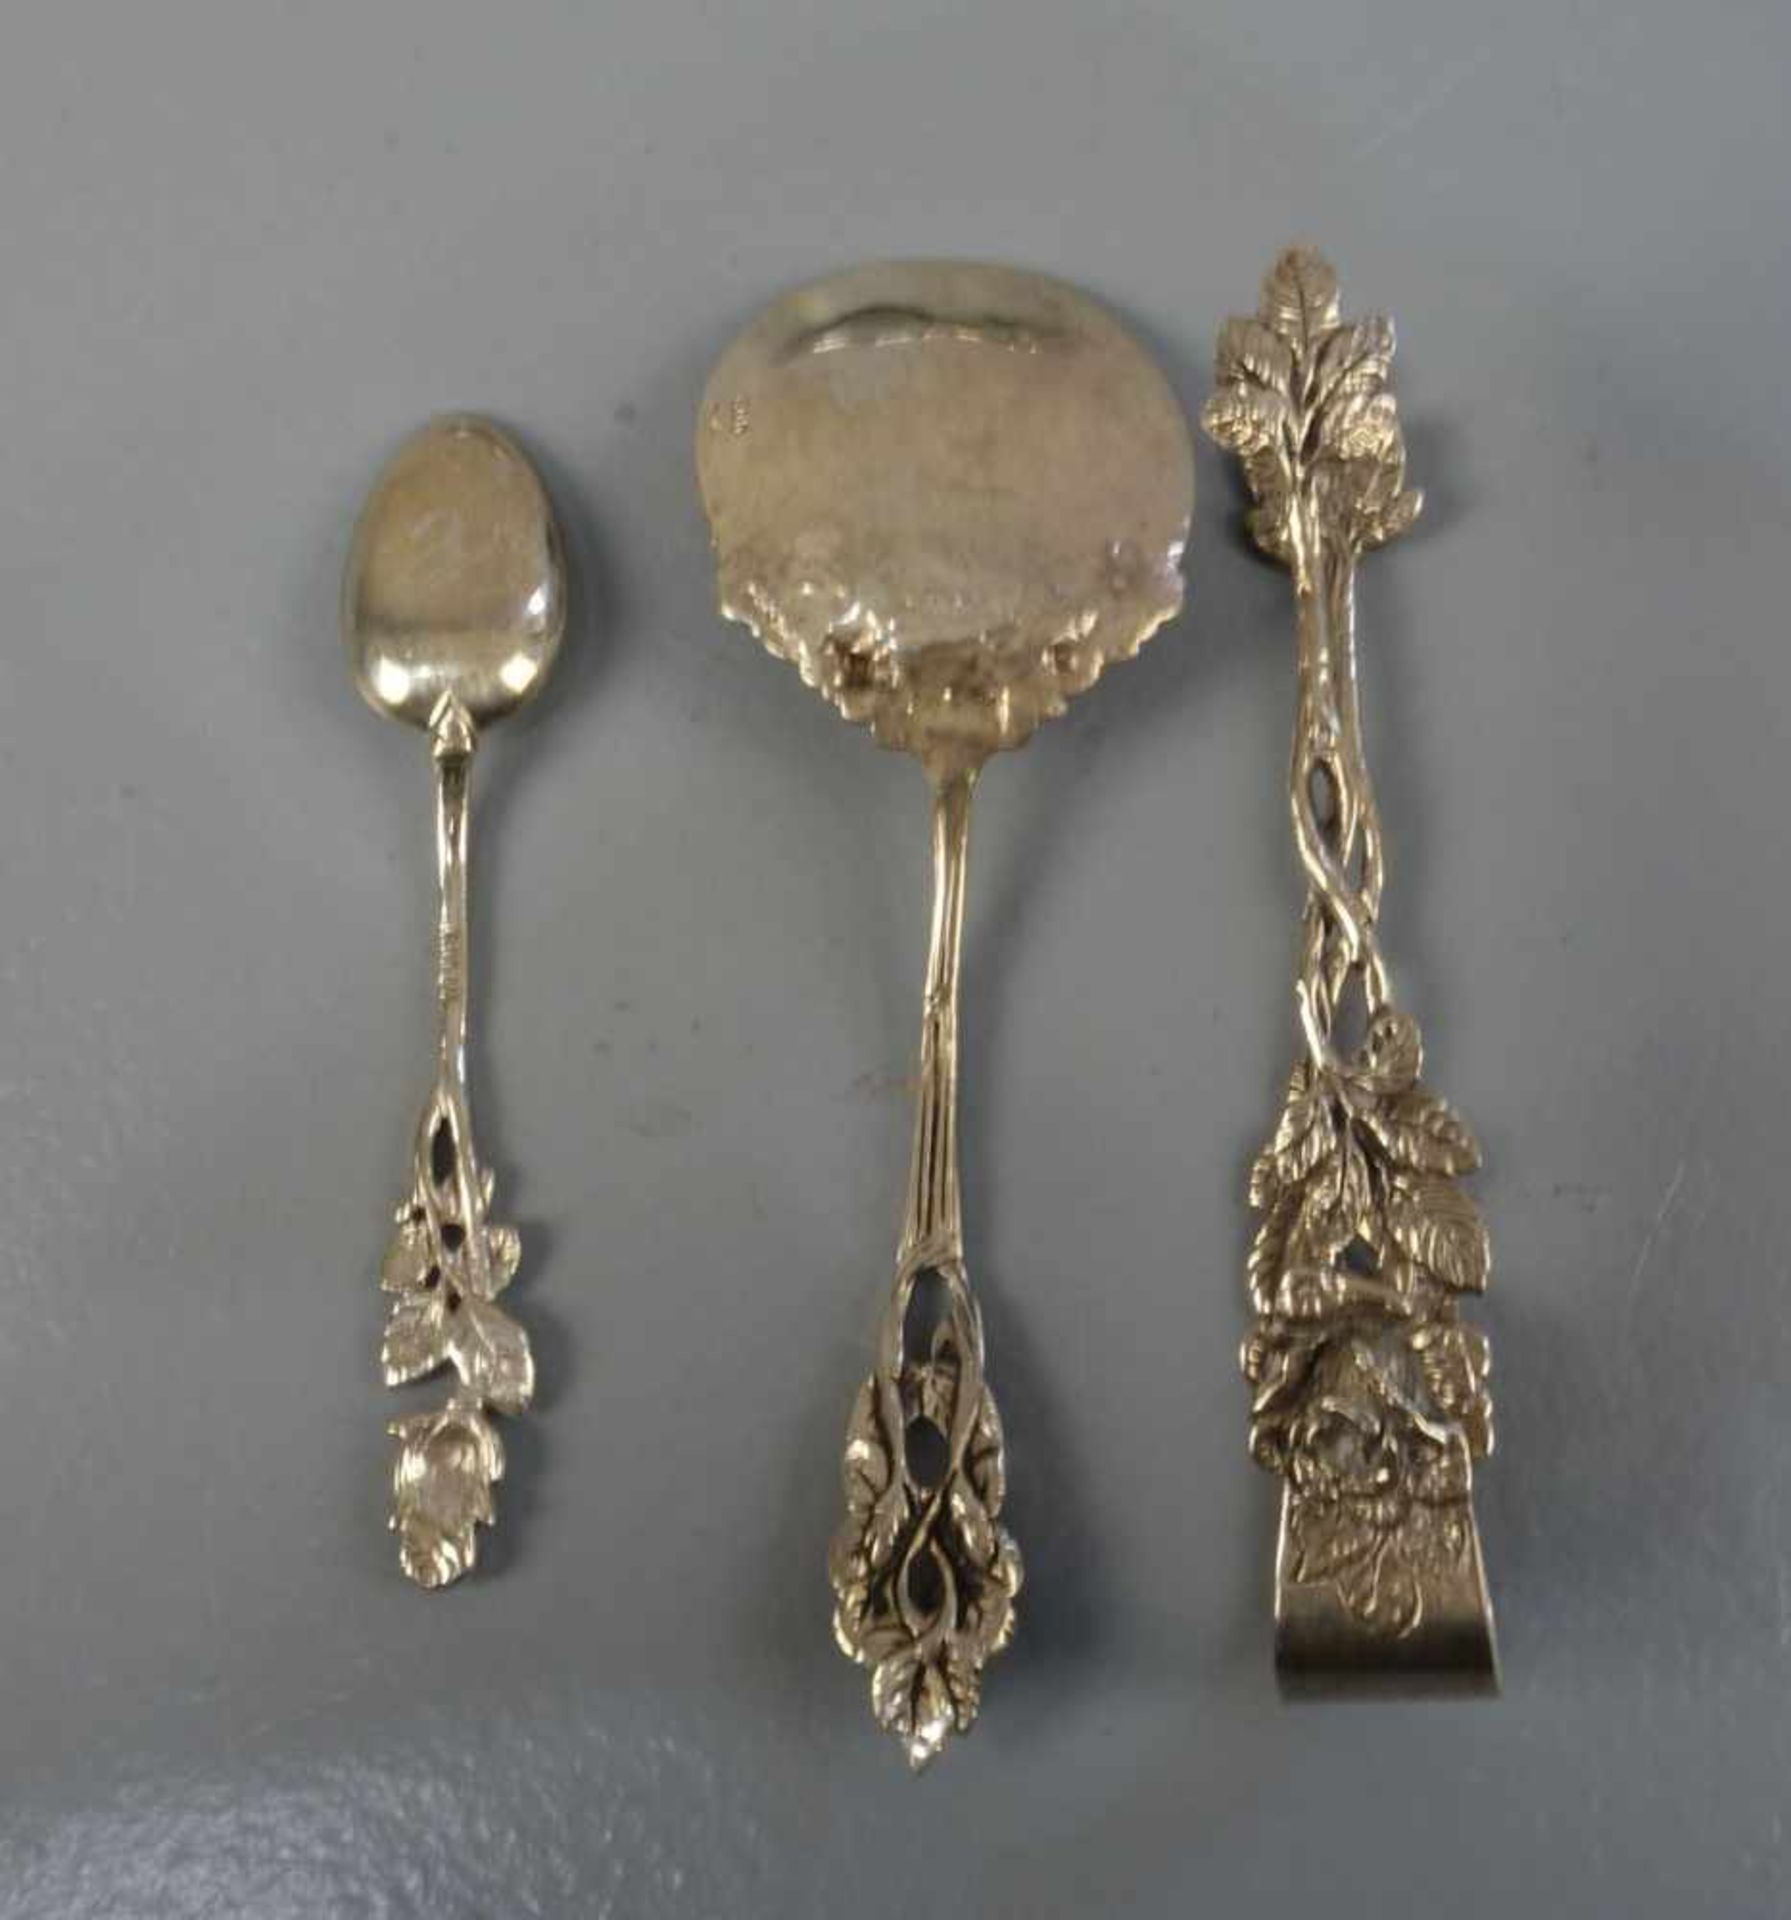 KONVOLUT VORLEGEBESTECK - 3 TEILE / silver serving cutlery - small spoon, sugar tong, serving spoon. - Bild 2 aus 3